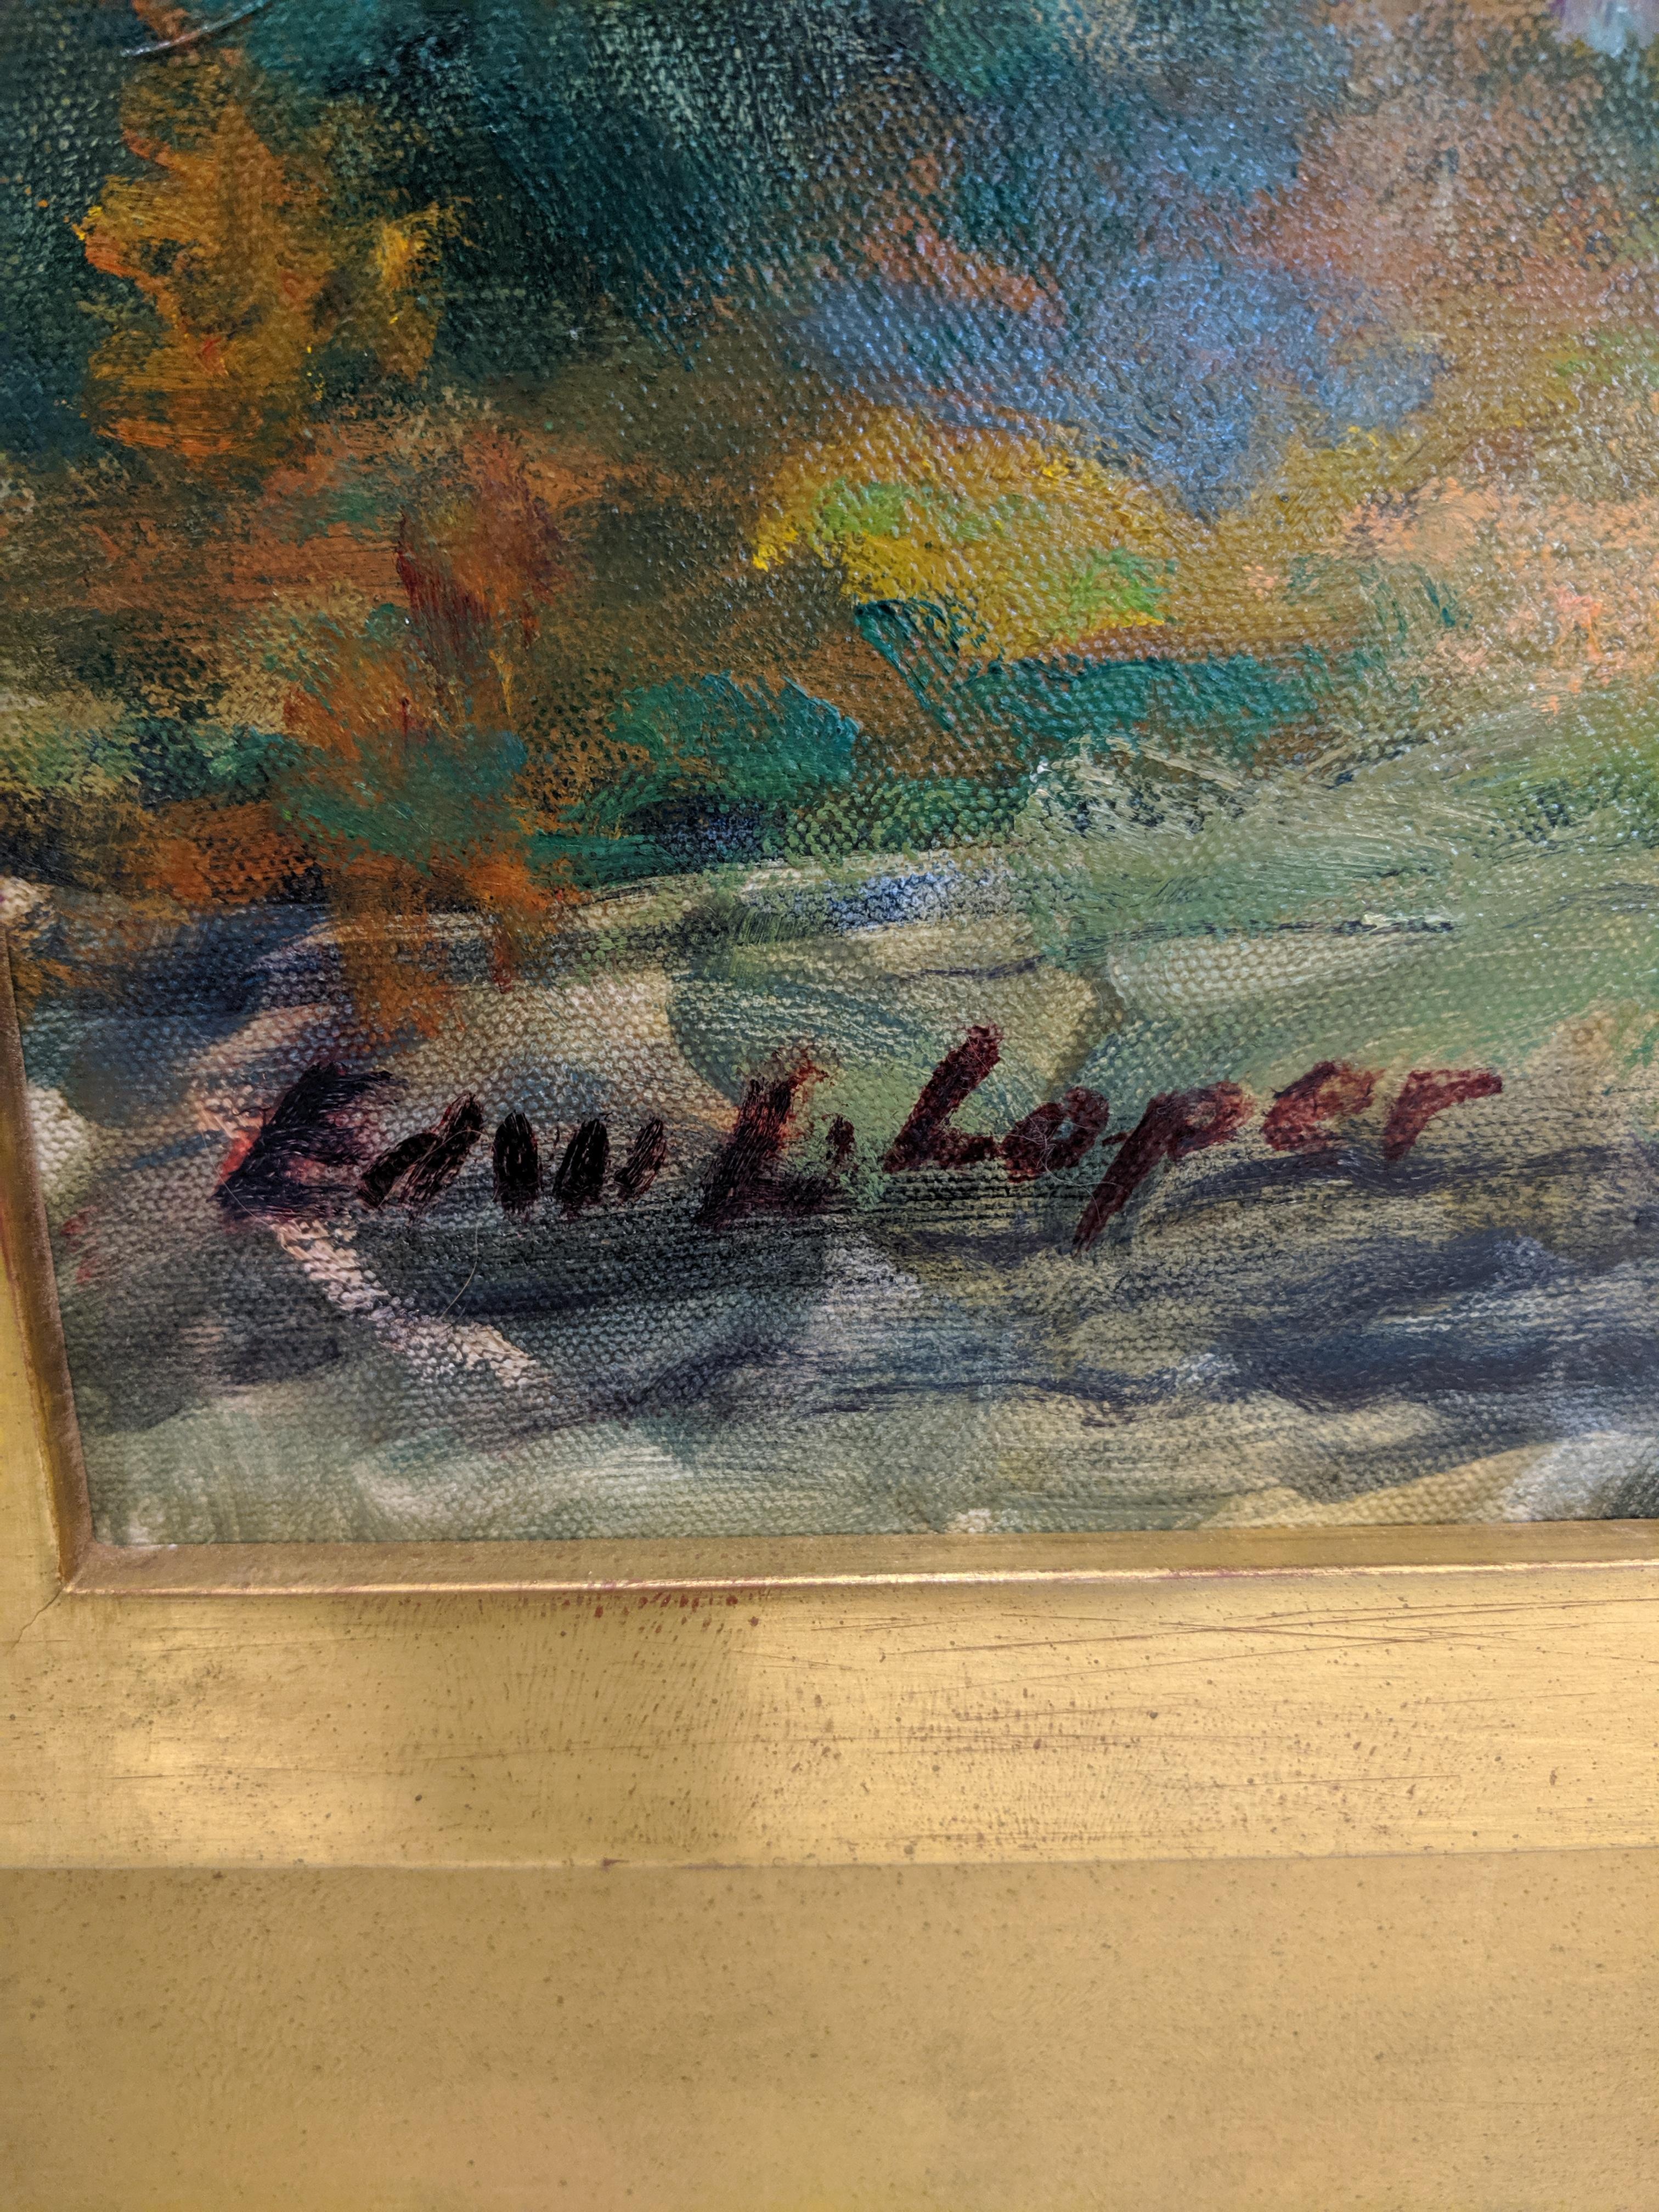 edward loper artist